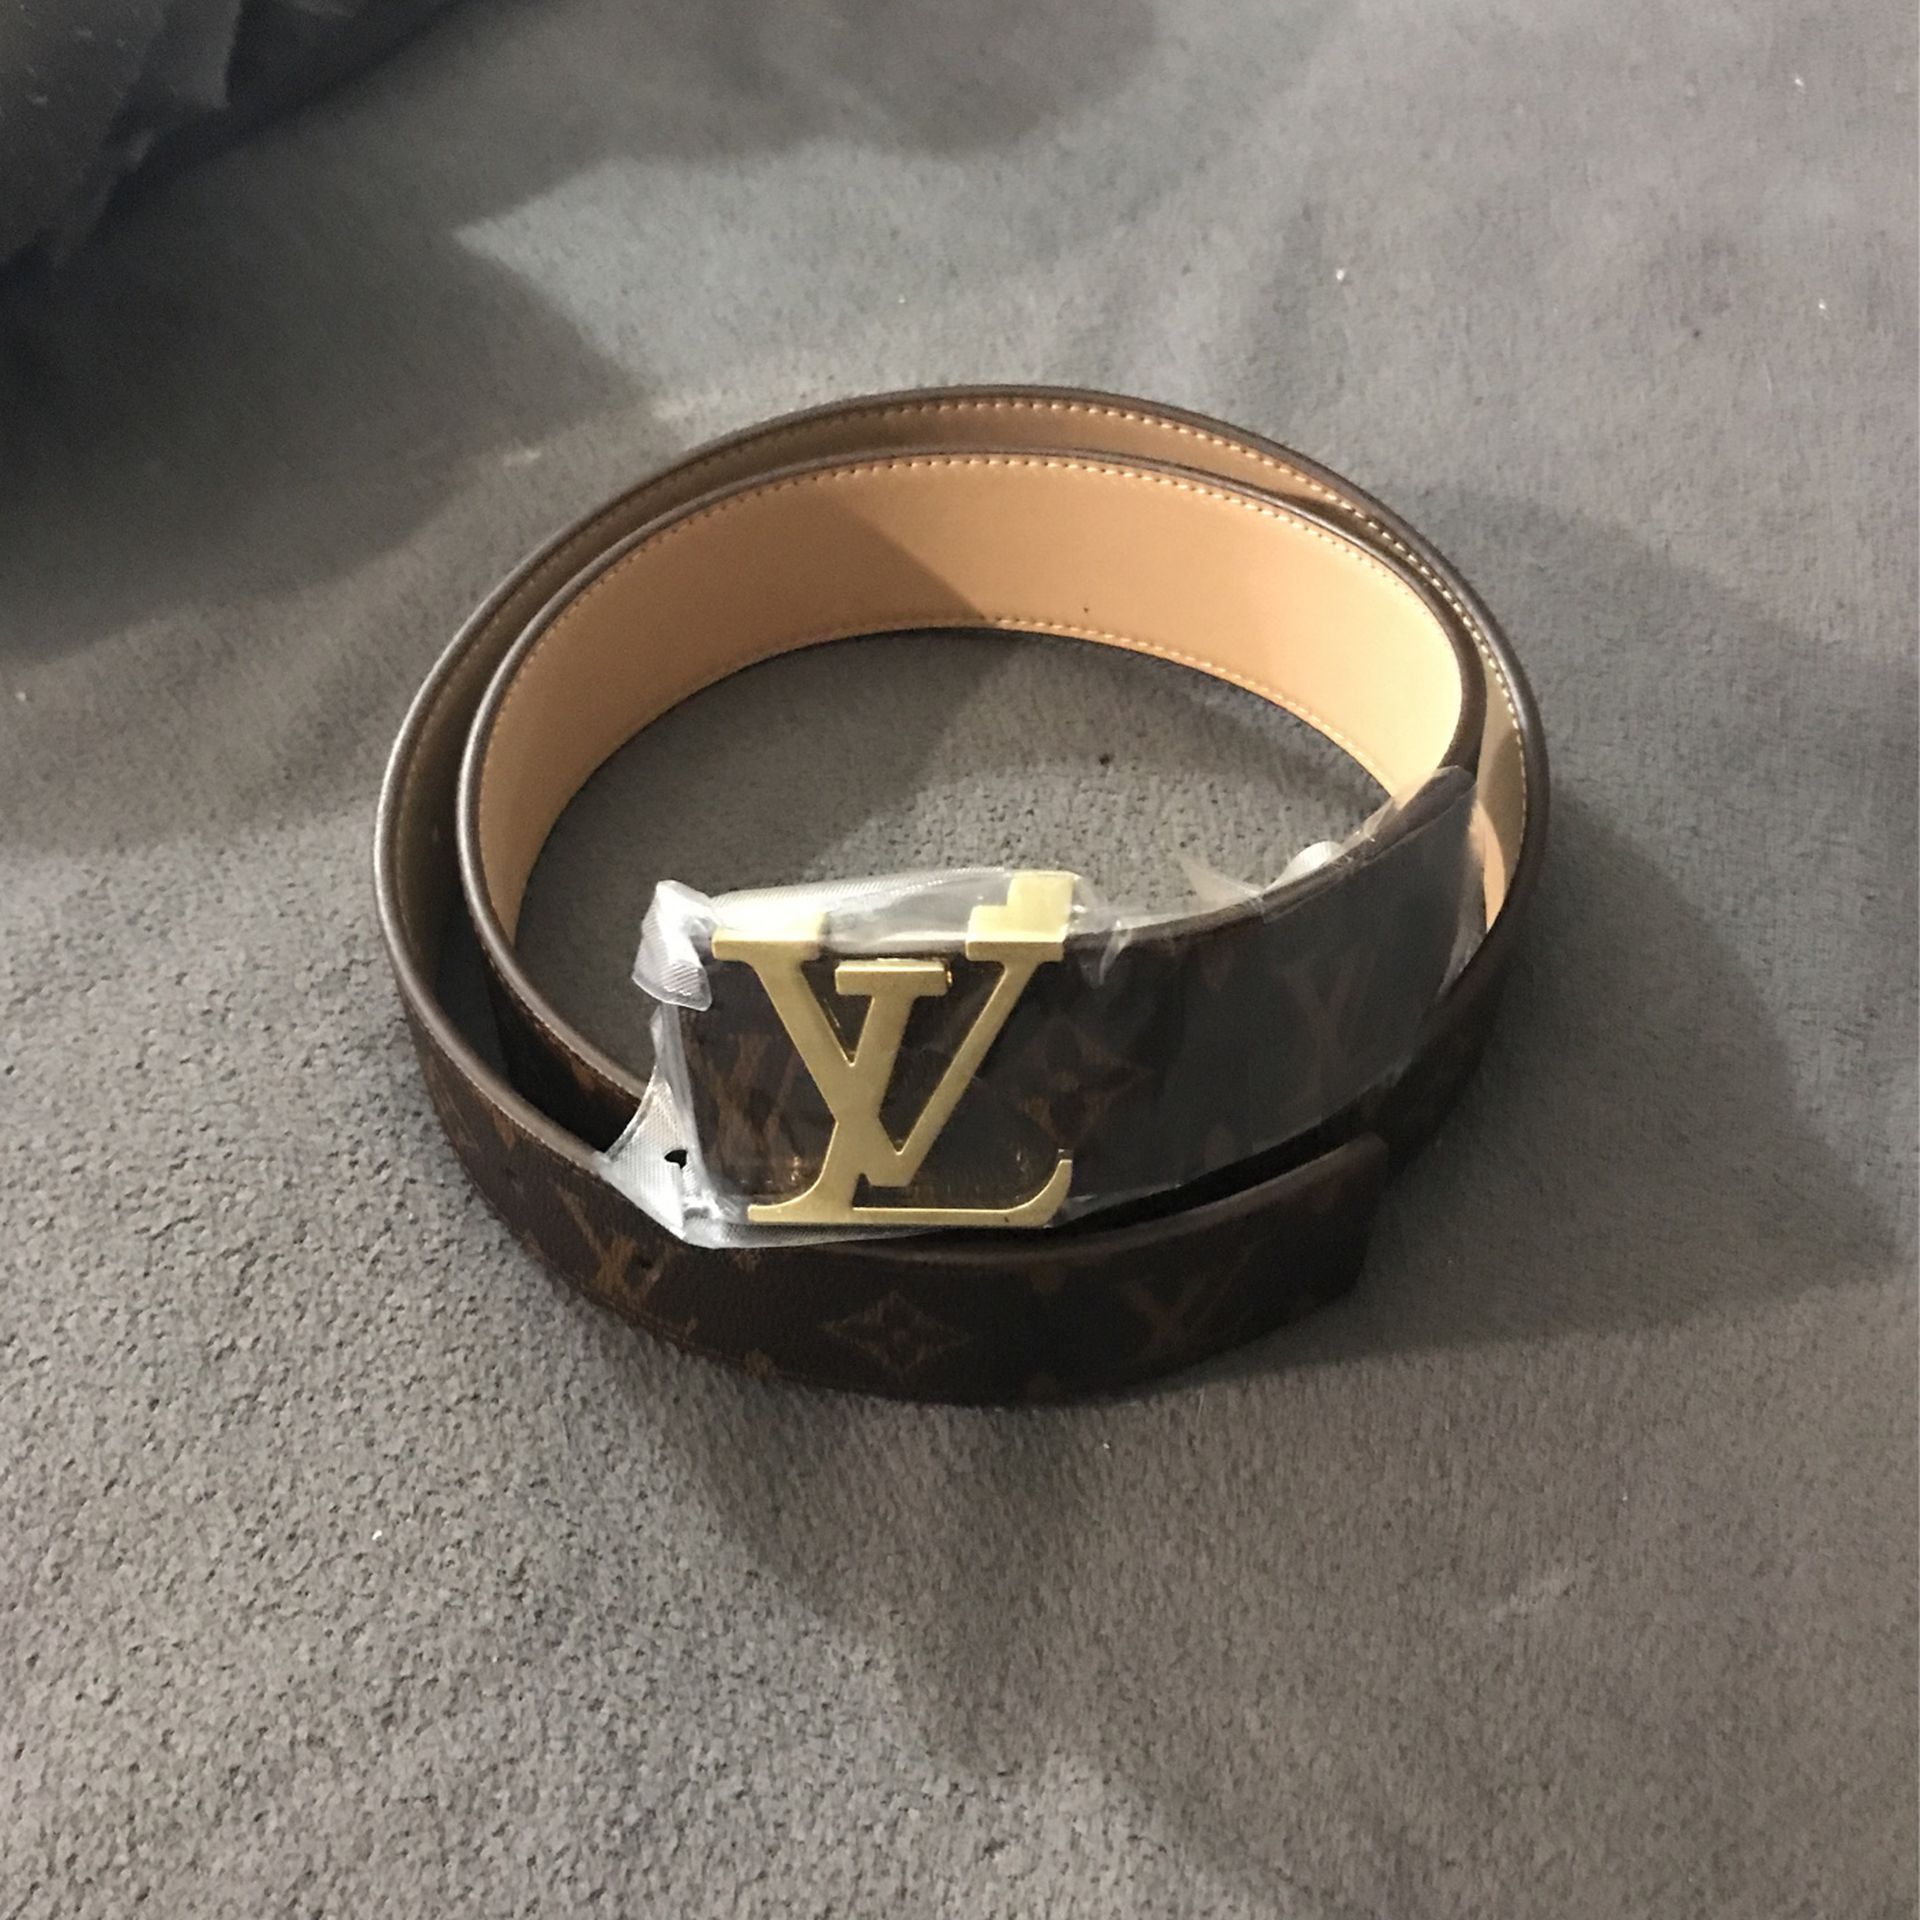 Louis Vuitton Designer Belts